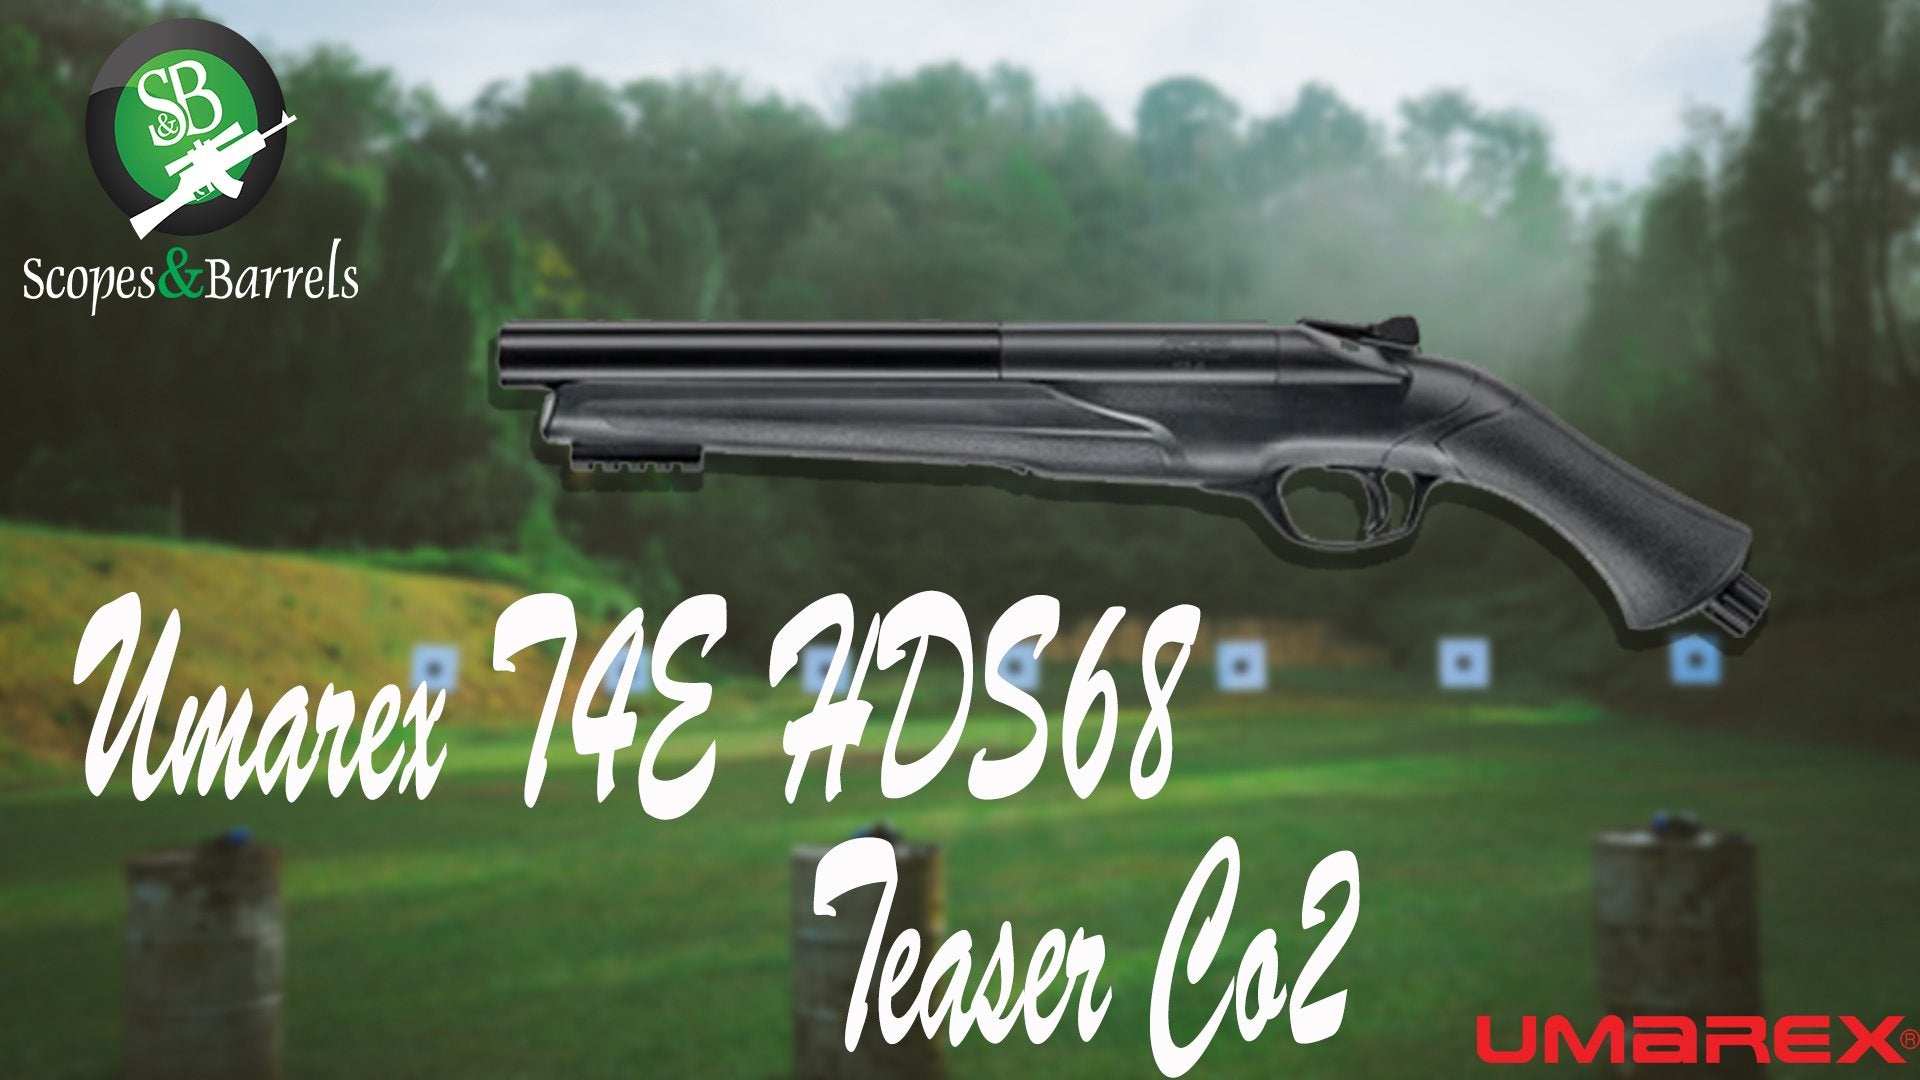 Blog: Umarex T4E HDS68 Teaser Co2 Powered Shotgun Airgun - Scopes and Barrels